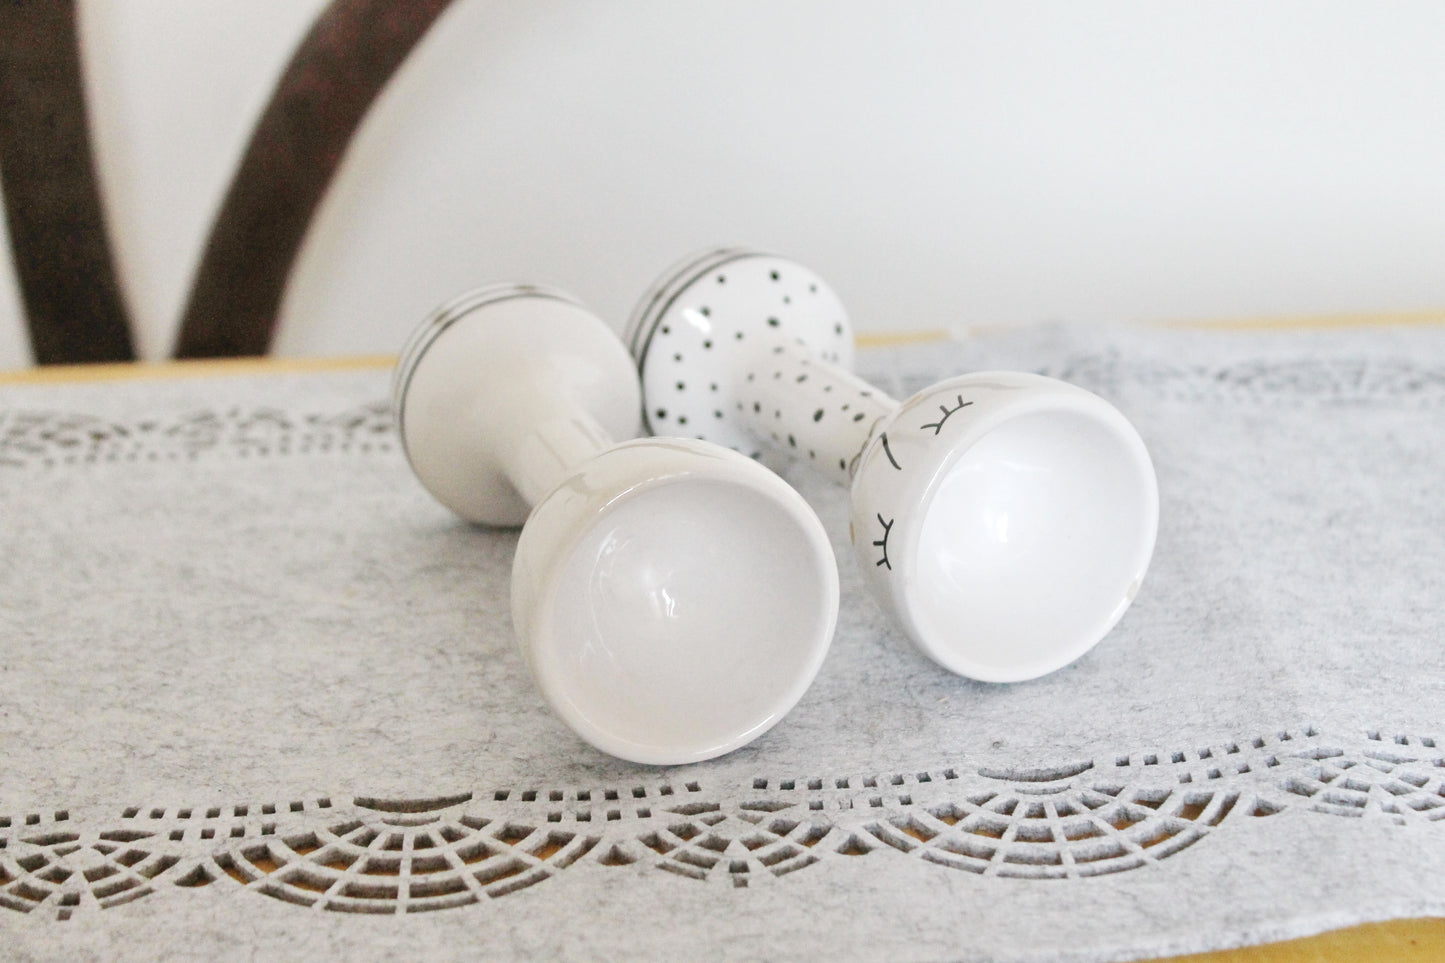 Set of two Vintage porcelain egg holders - 5.5 inches - Vintage Germany ceramic egg stand - 2000s